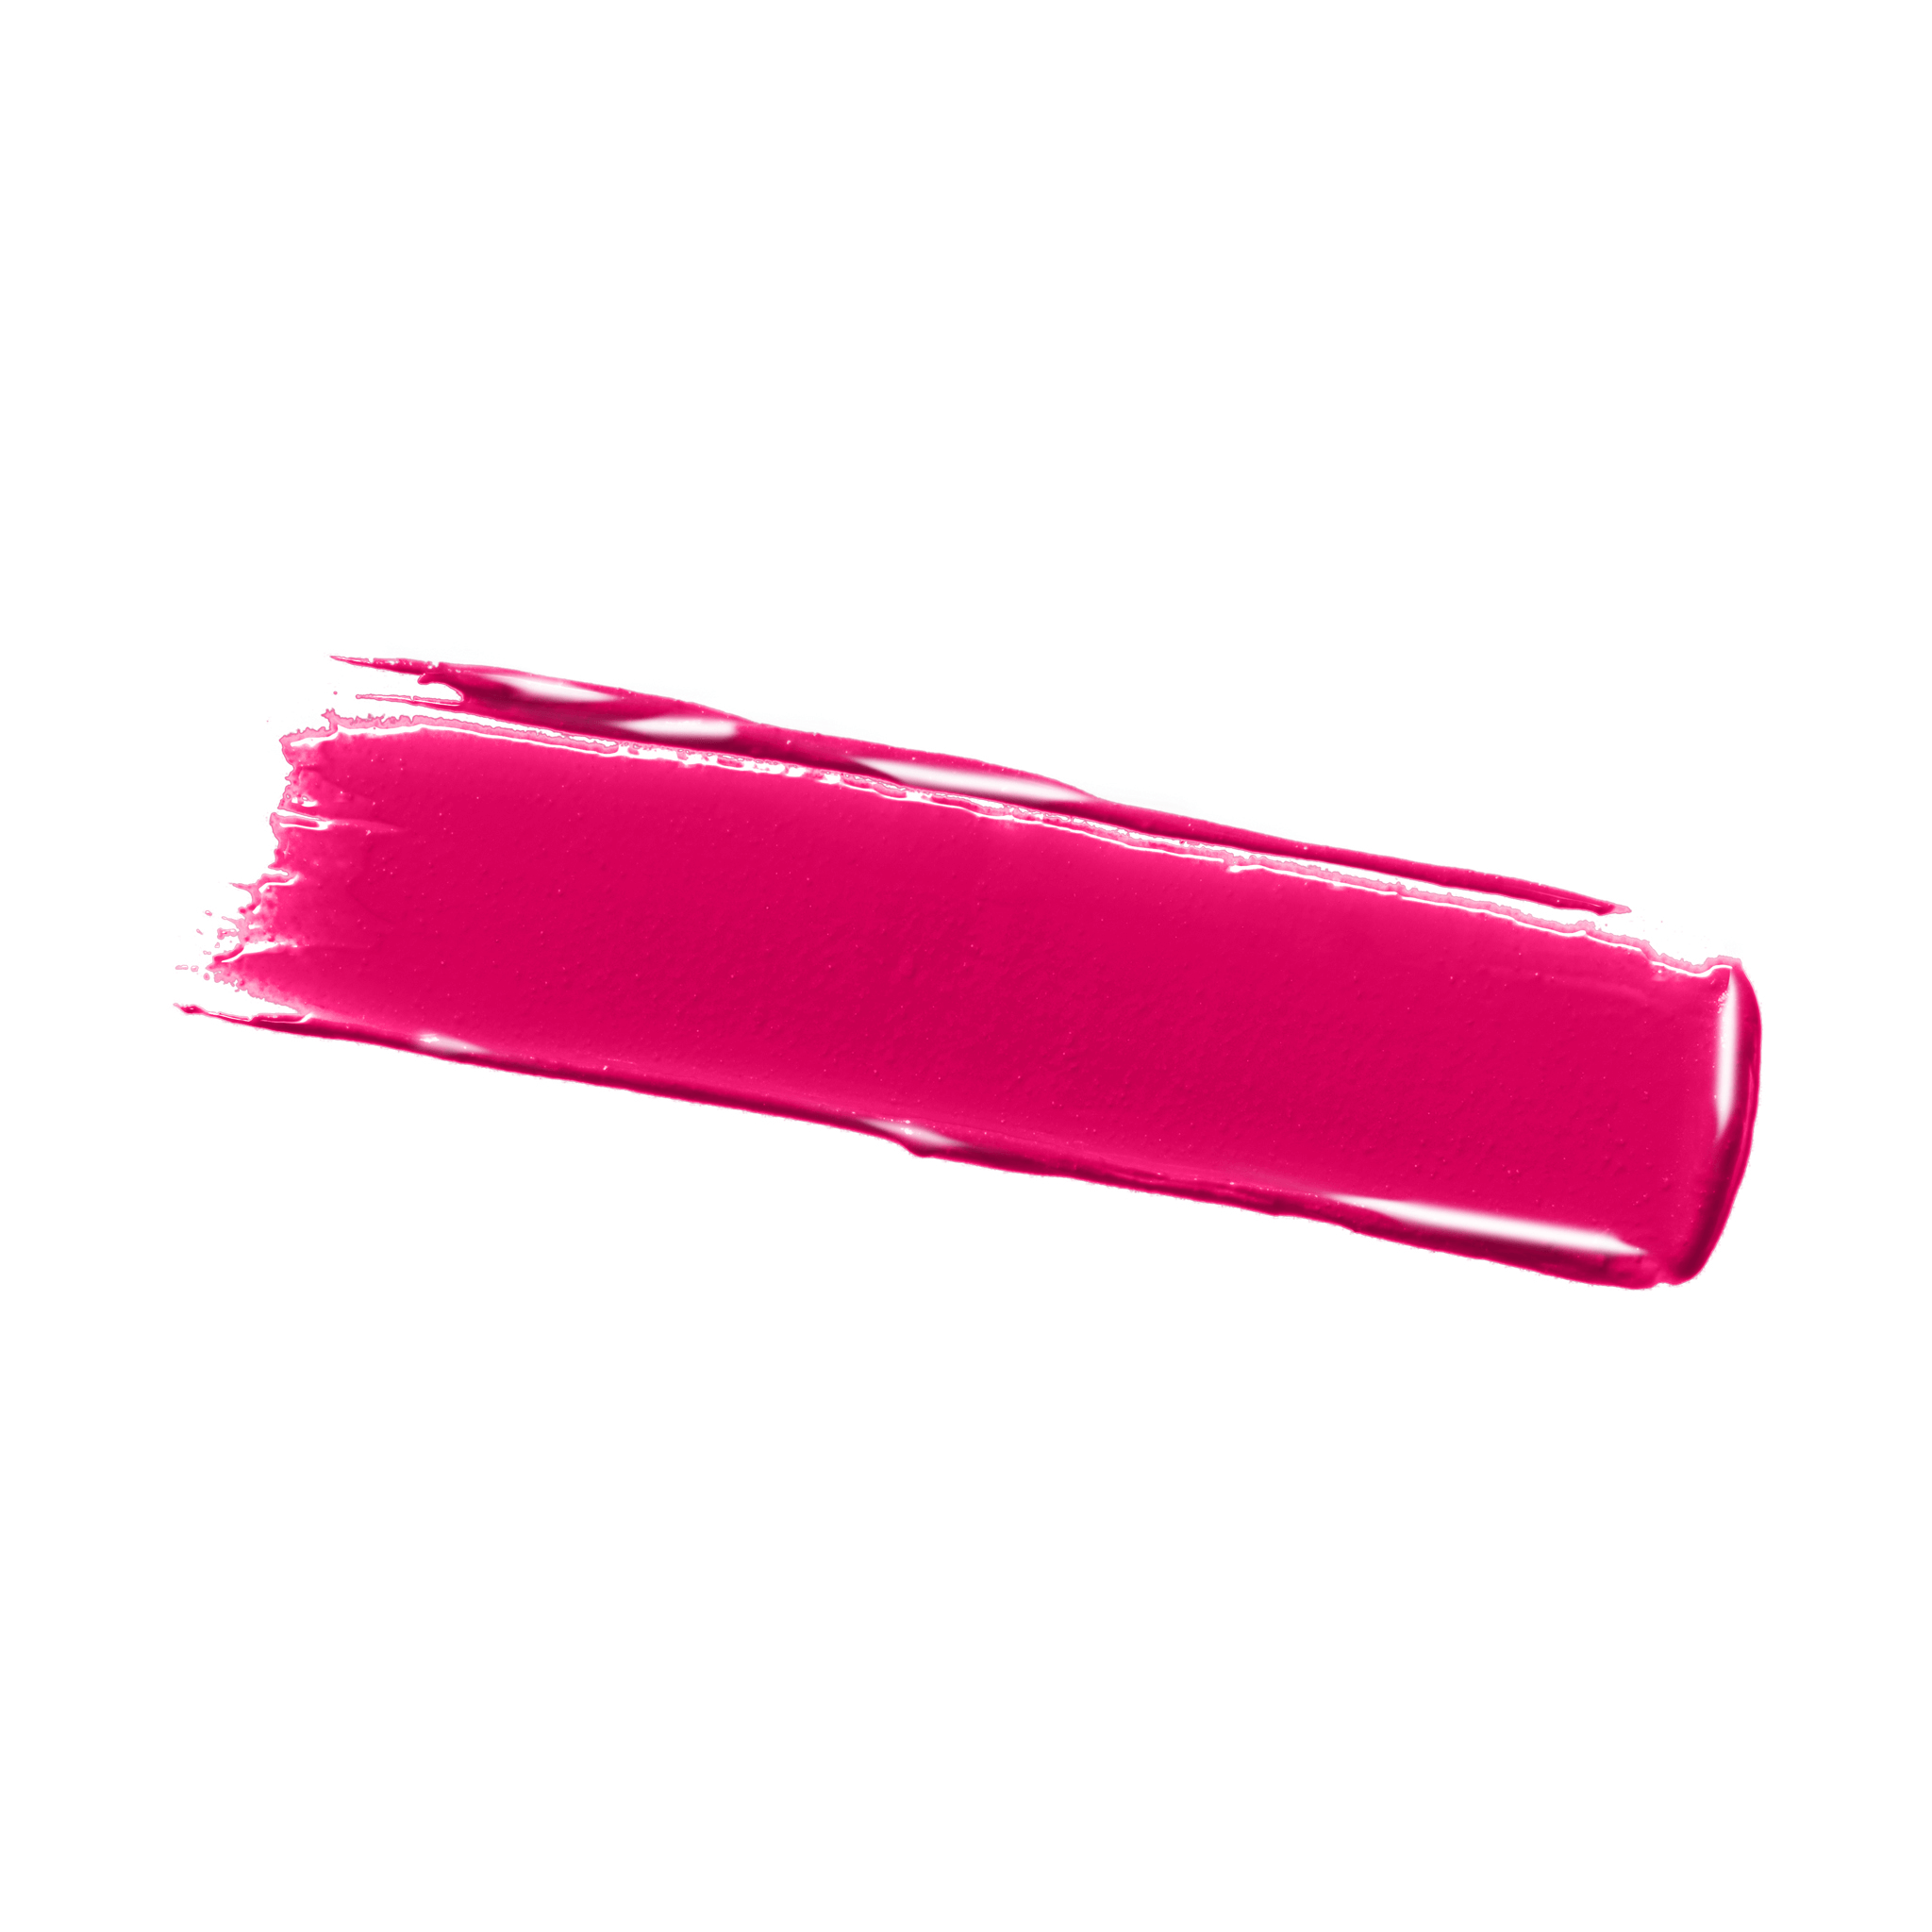 MILANI Color Fetish Lipstick - Covet #190